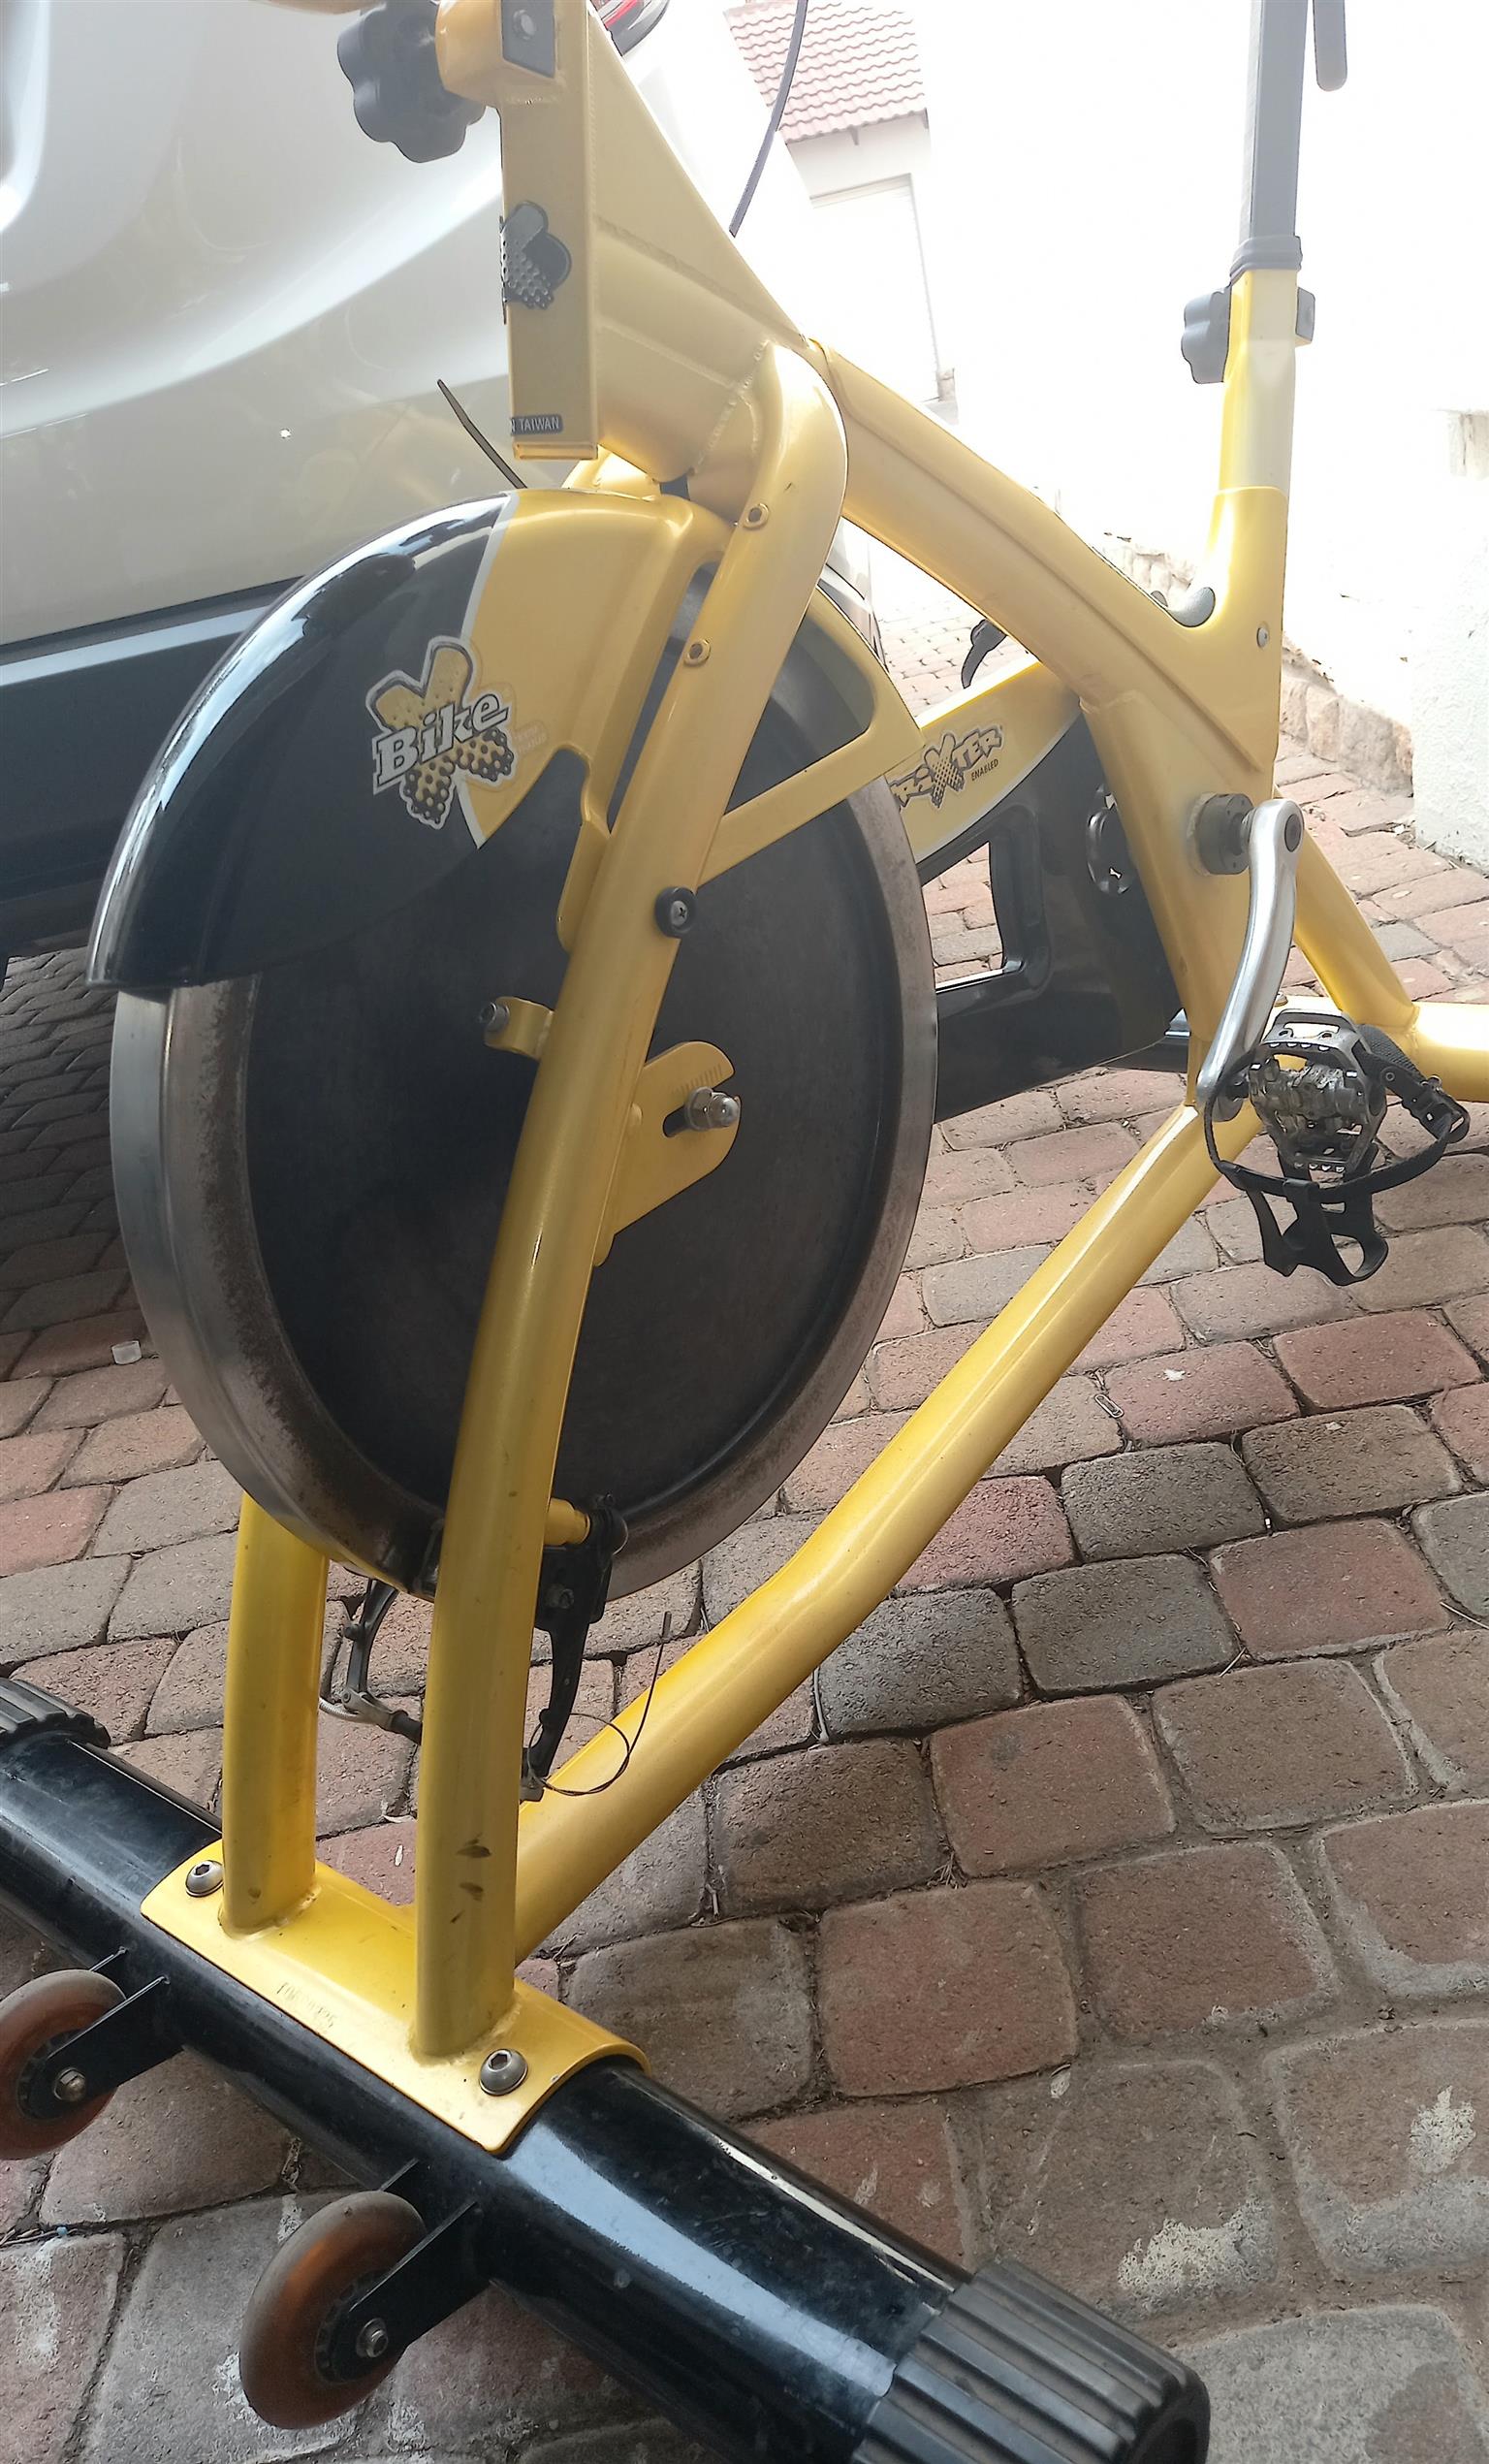 Giant Trixter Spin Bike 